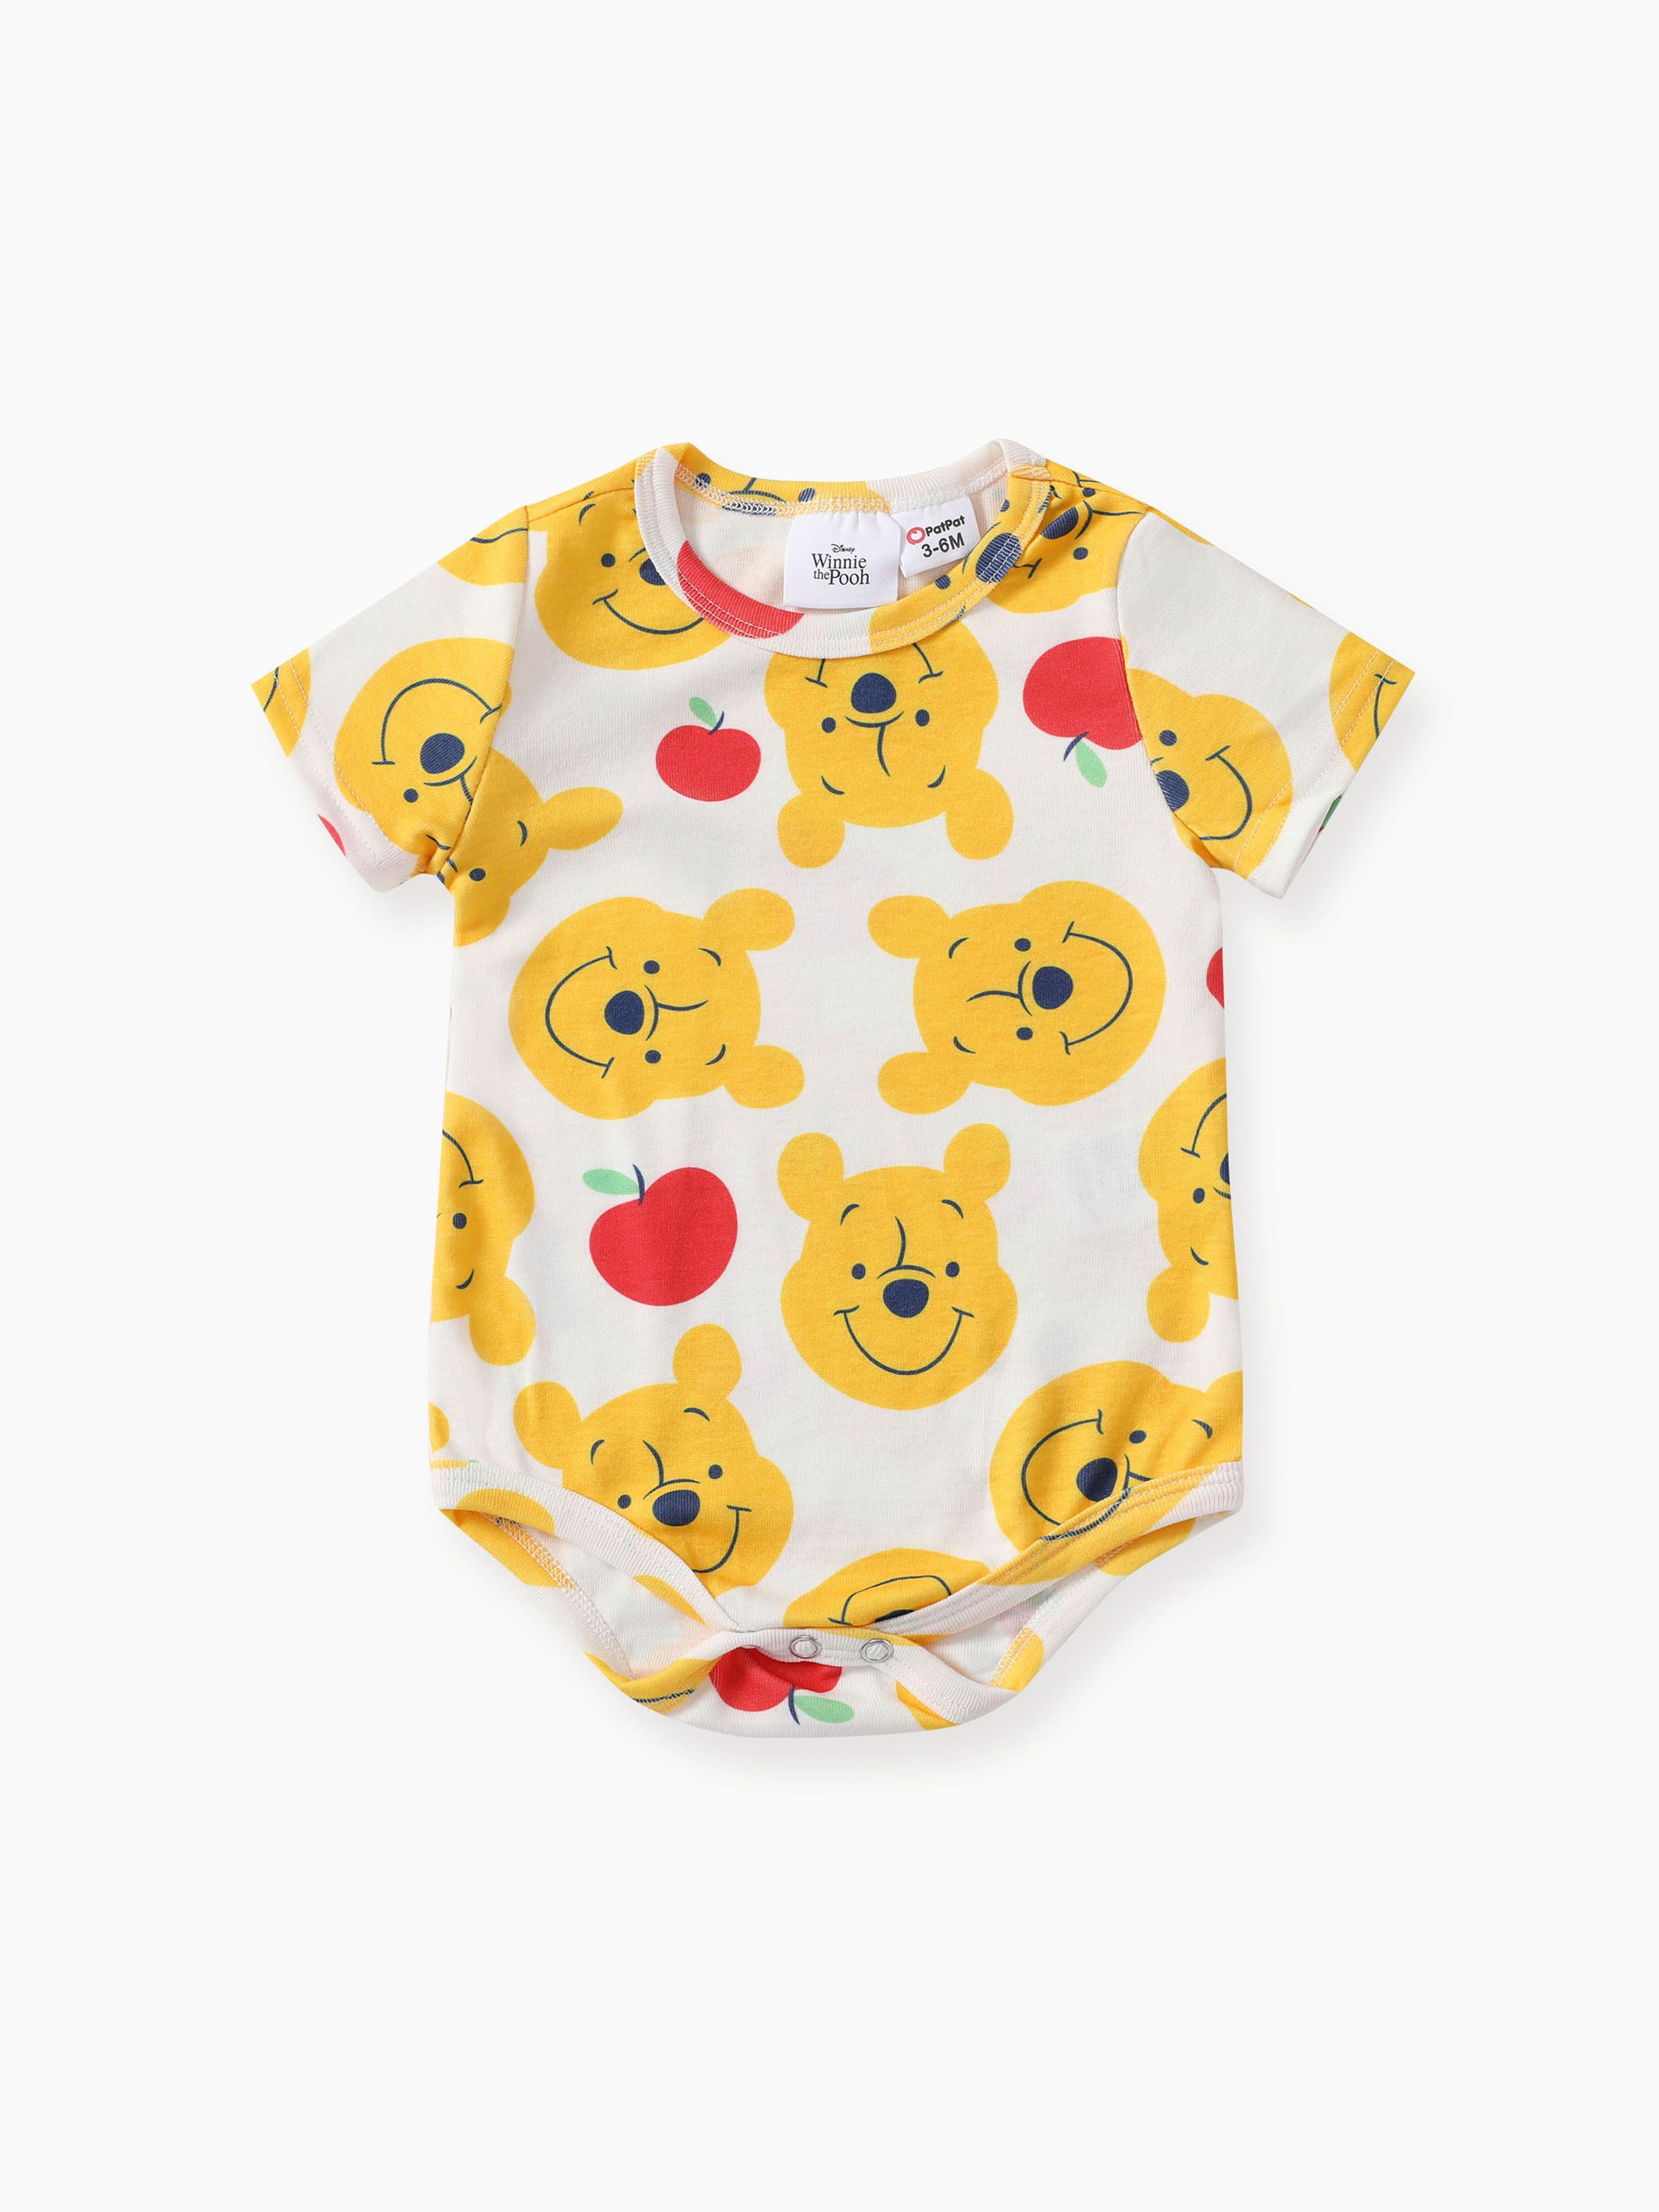 

Disney Winnie the Pooh Baby Boys/Girls 1pc Naia™ Fun Character Fruit/Striped Print Short-sleeve Romper